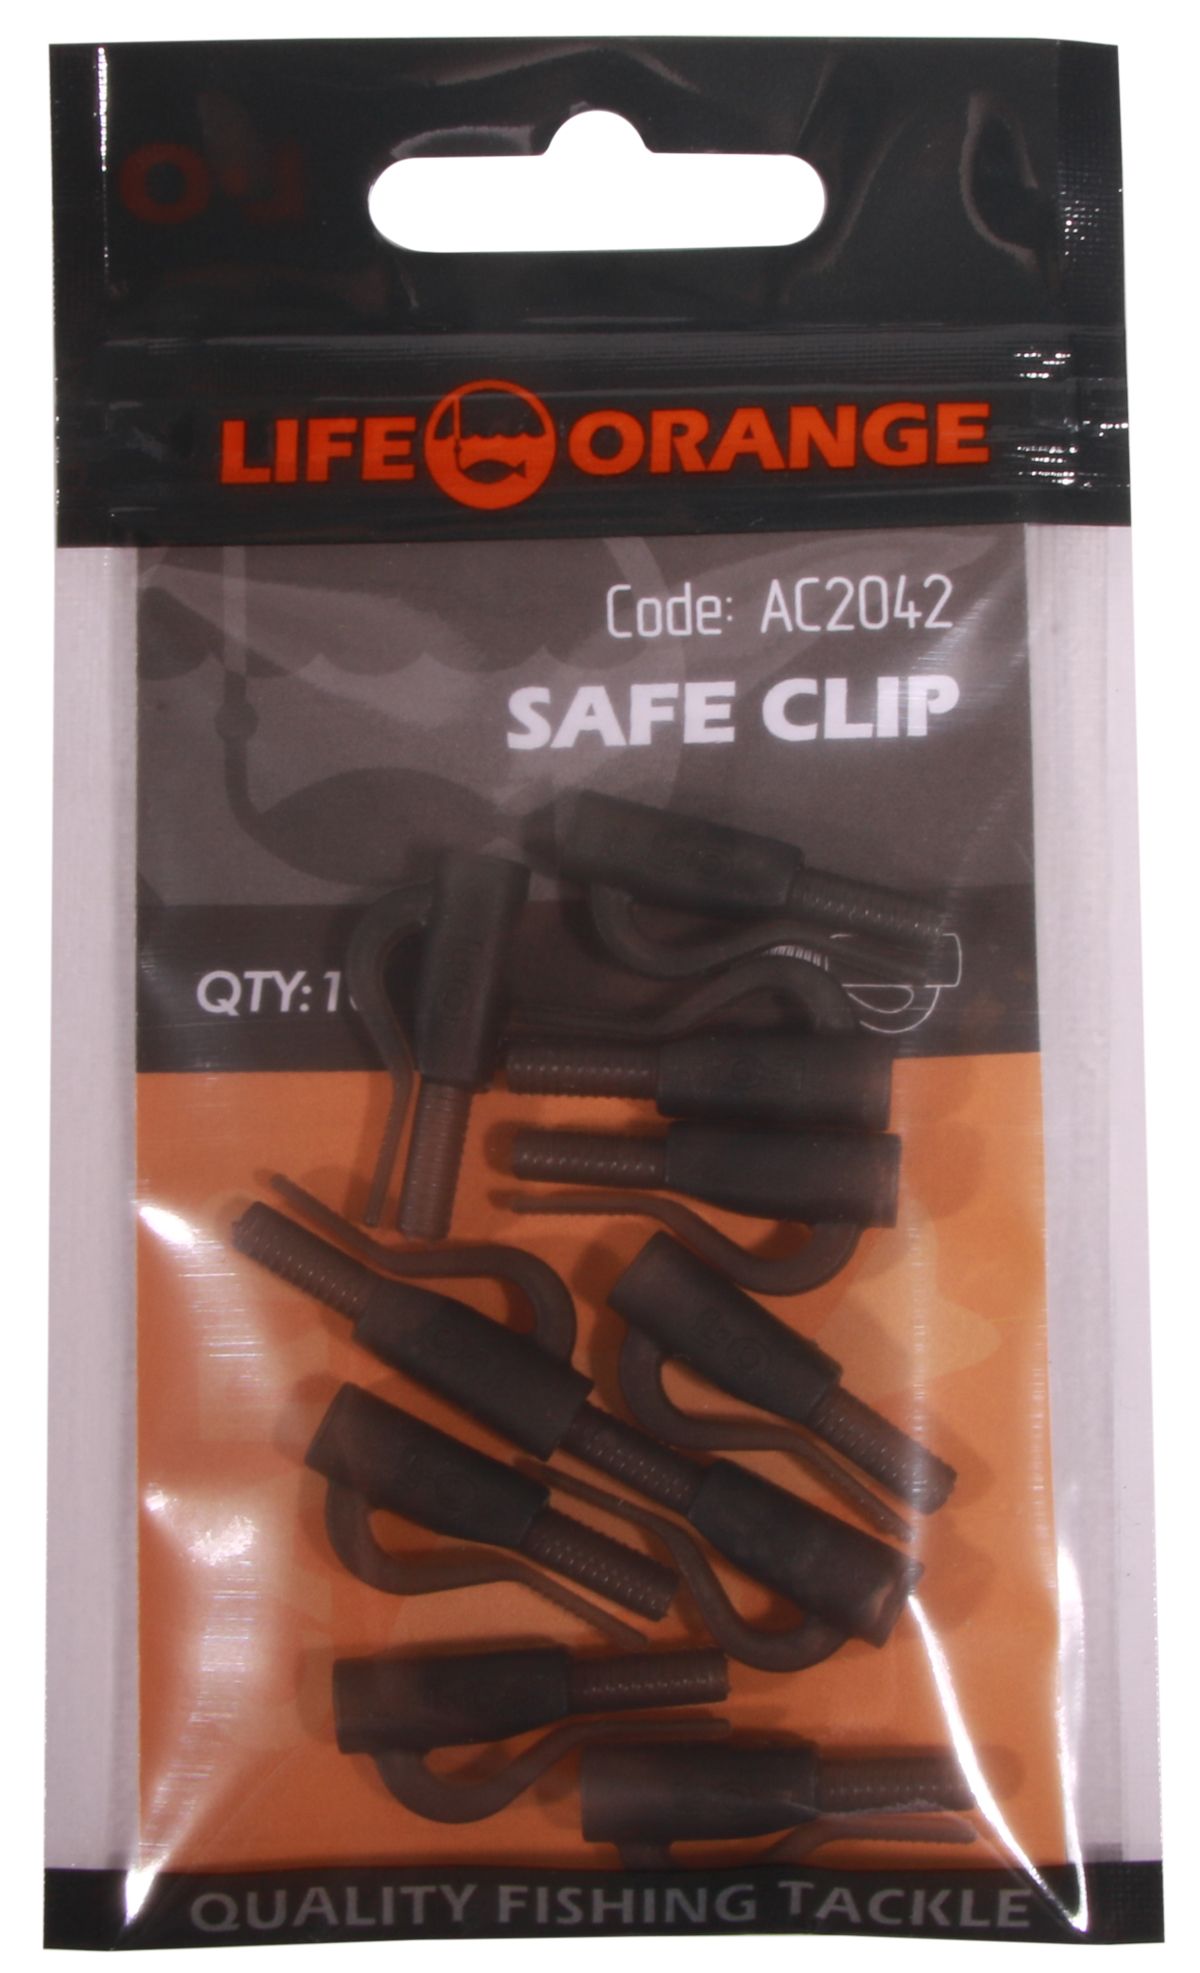 Life Orange Set Lead Clip Universal